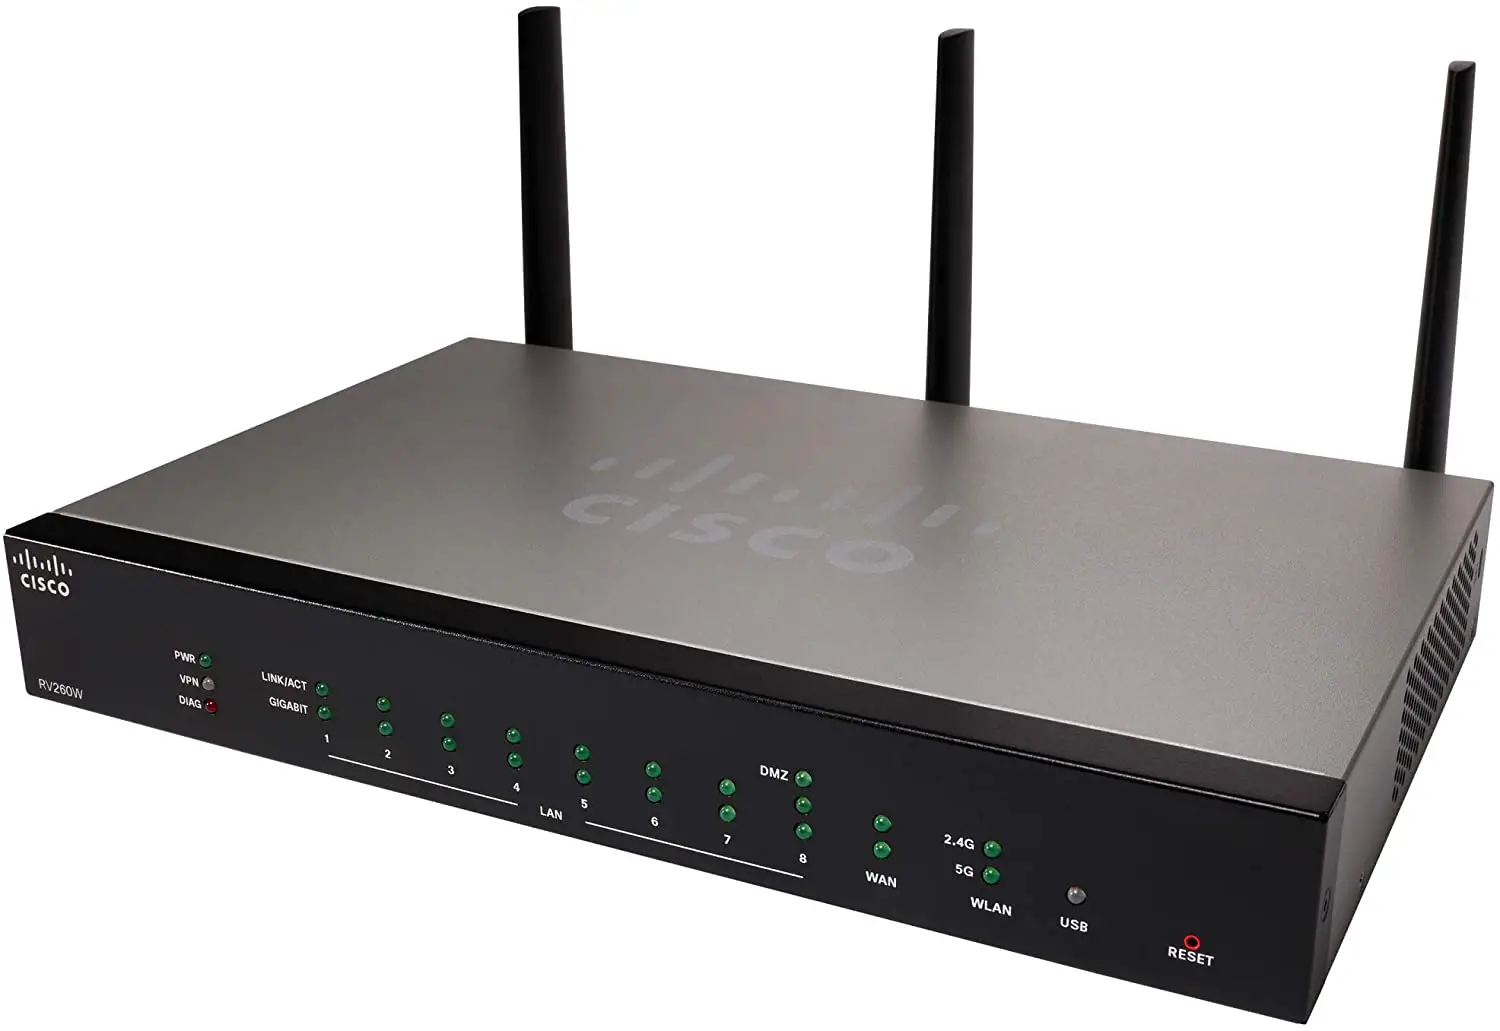 Cisco RV260W VPN Router with 8 Gigabit Ethernet (GbE) Ports plus Wireless-AC VPN Firewall